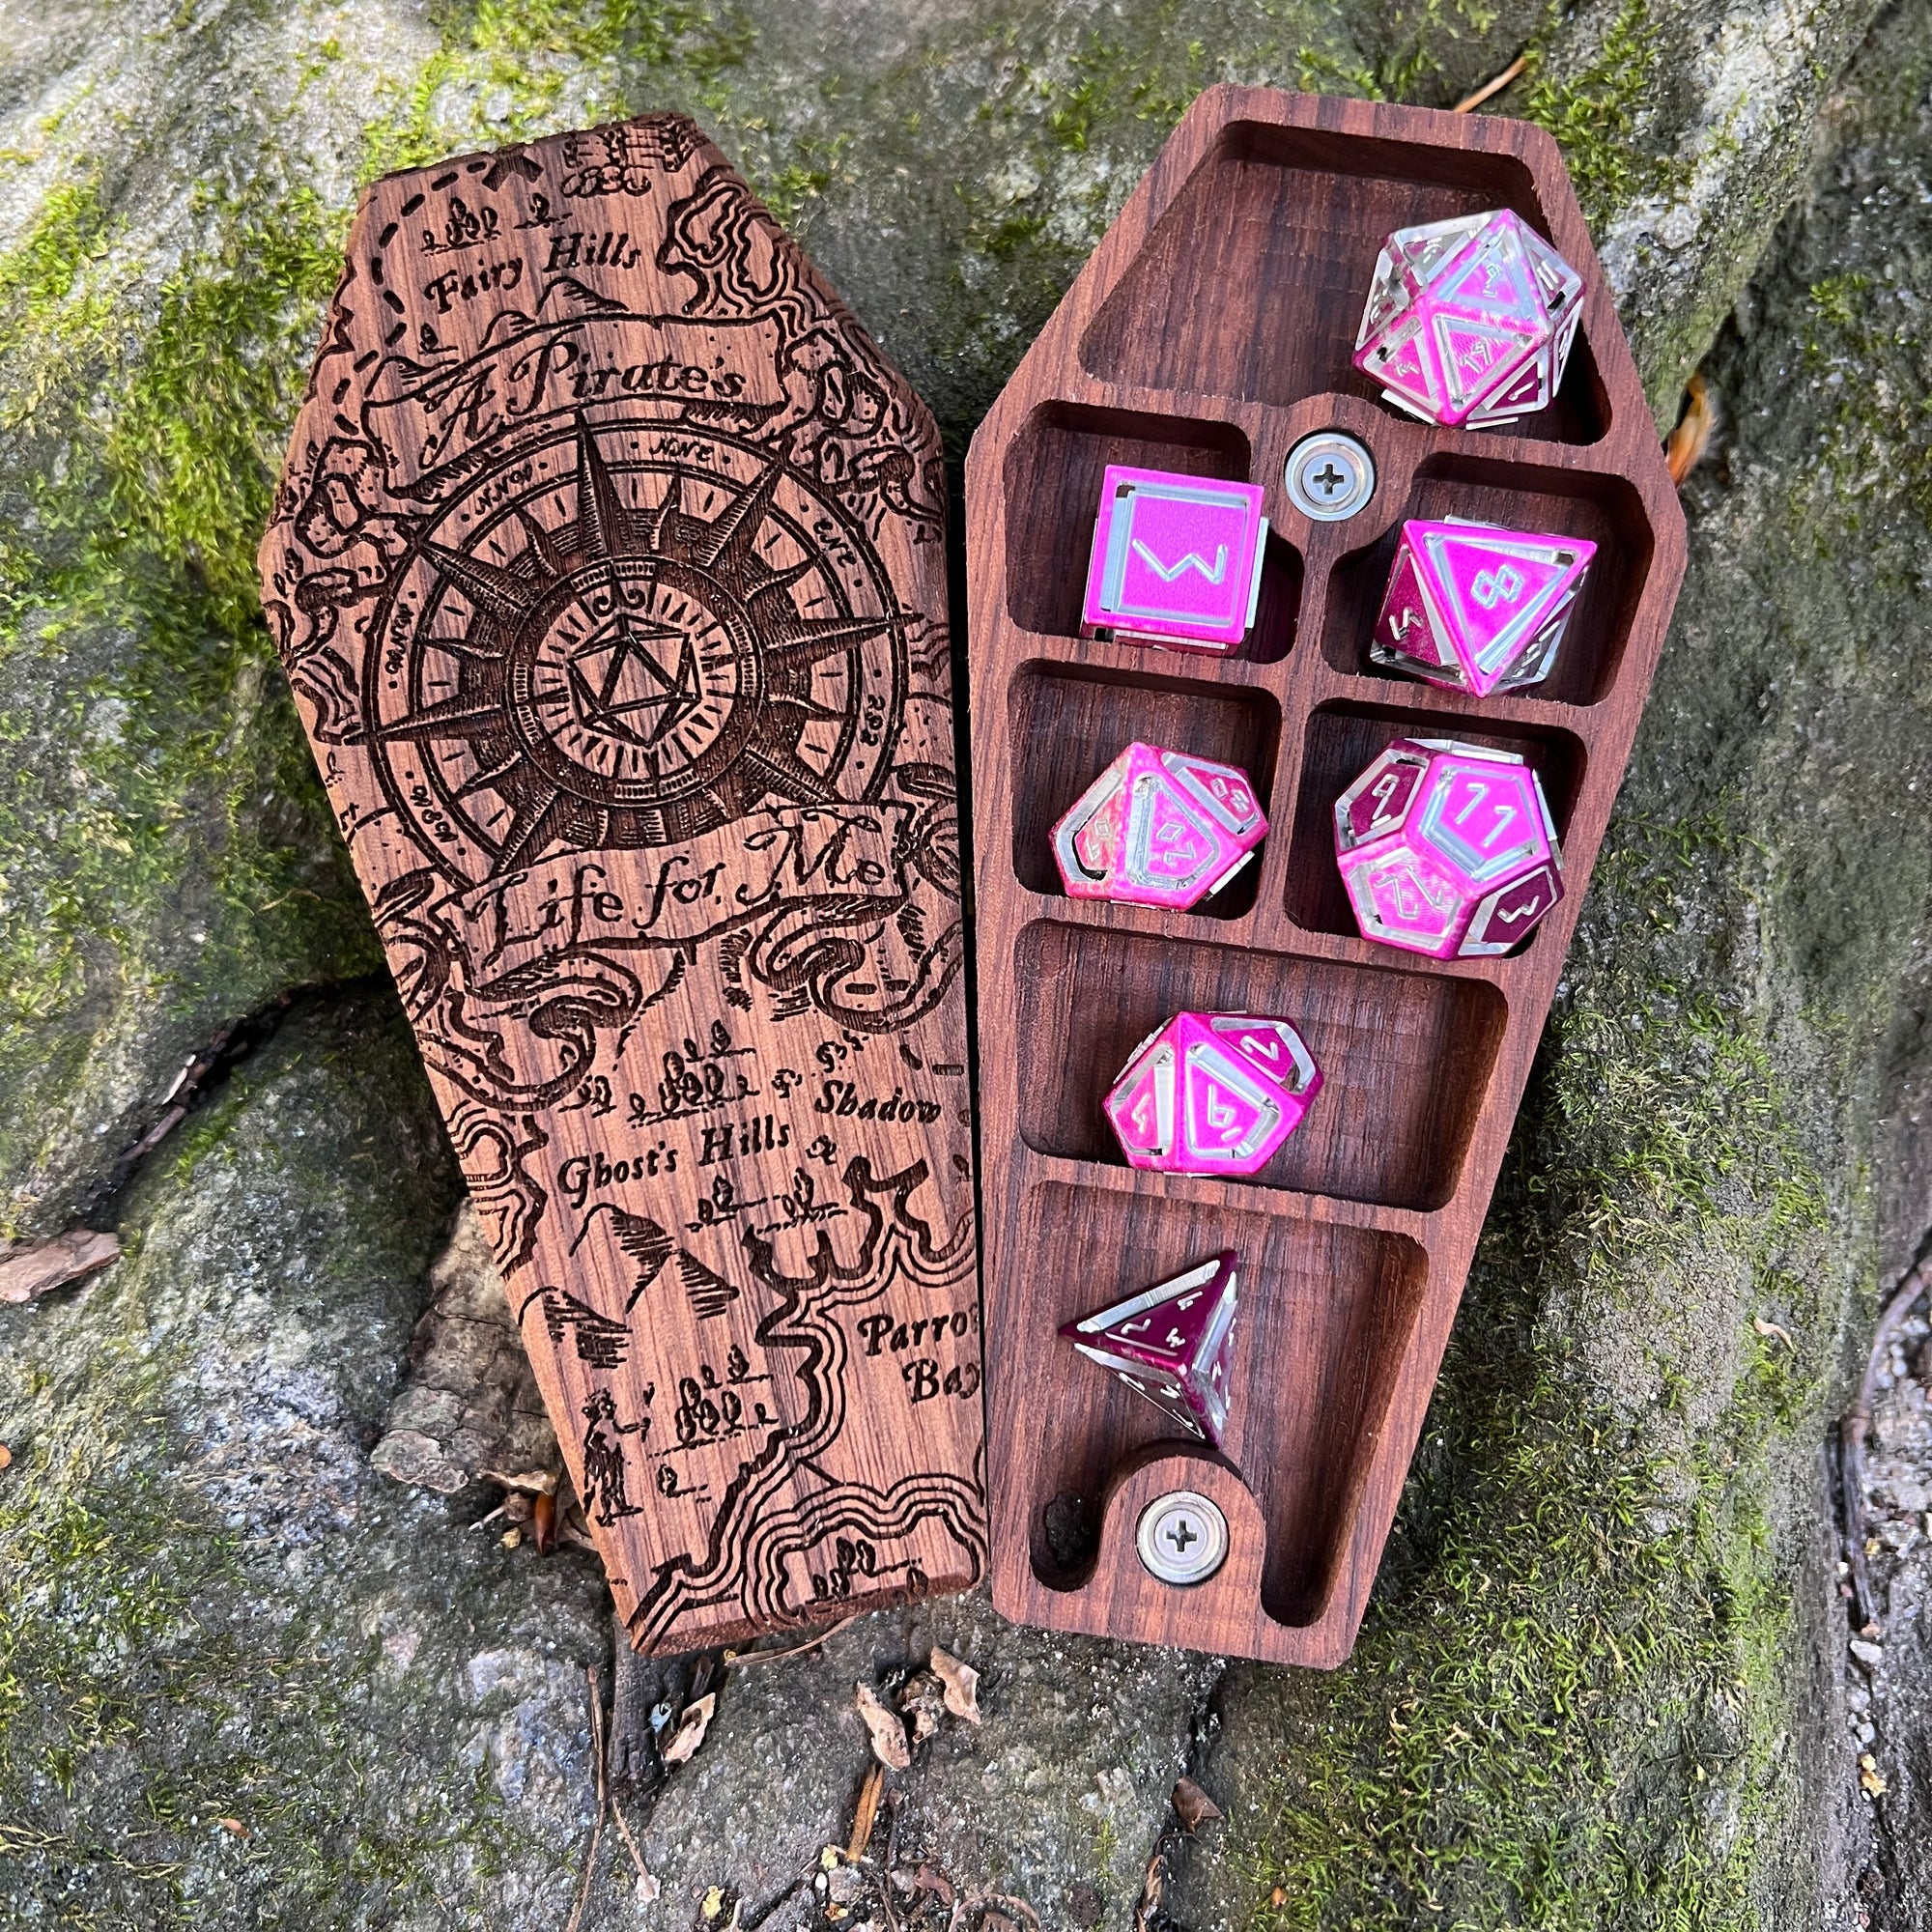 A Pirates Life-Dice Crypt-Cryptic Creative-dice casket-dice vault-dice box-dice tray-Cryptic Creative